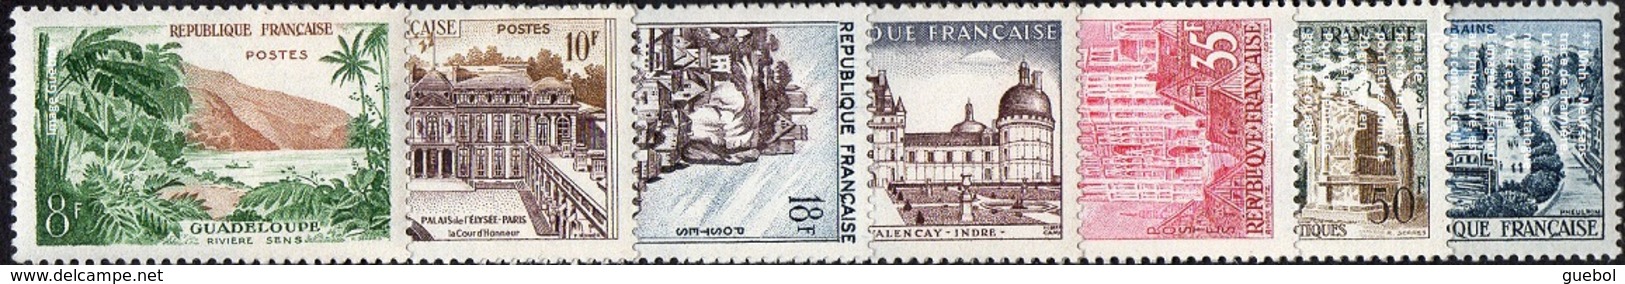 France N° 1125 à 1131 ** Sites, Monuments - Guadeloupe, Elysée, Beynac, Valencay, Rouen, St_Rémy, Evian - Neufs